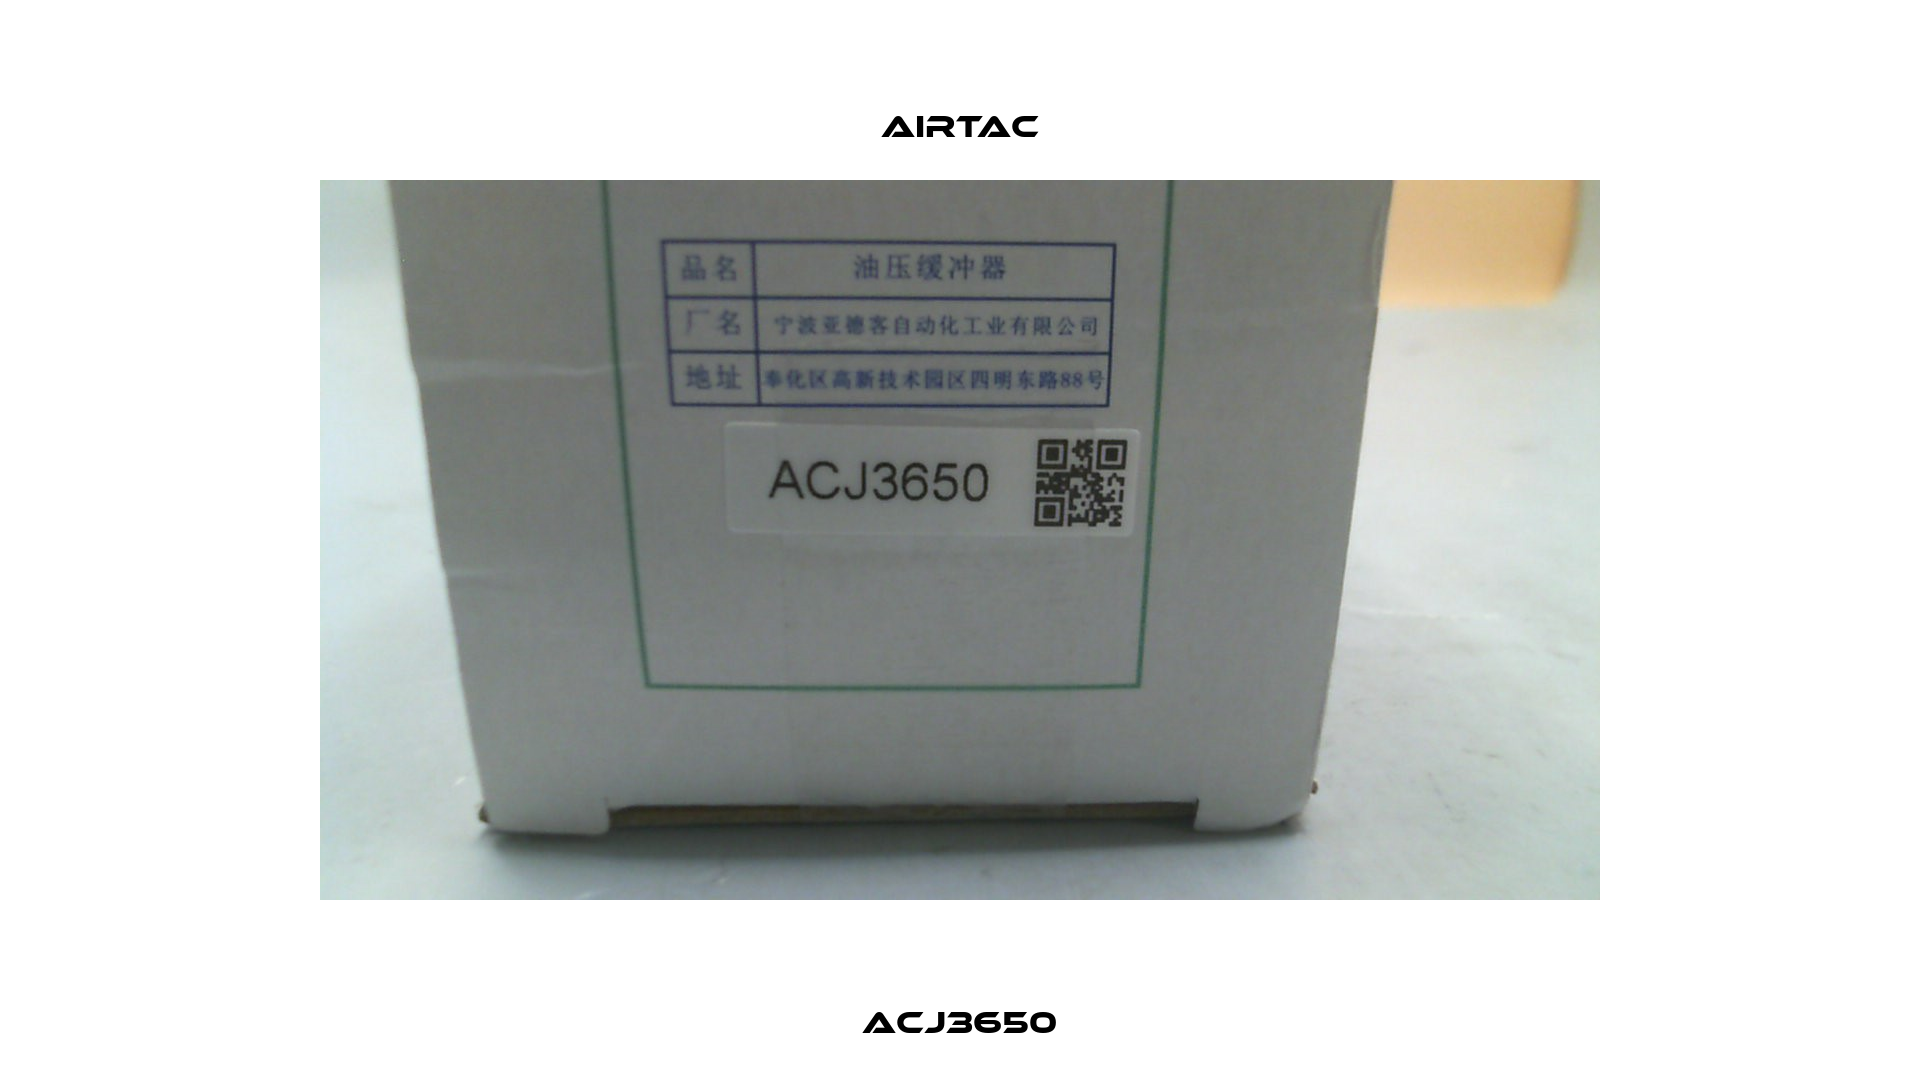 ACJ3650 Airtac